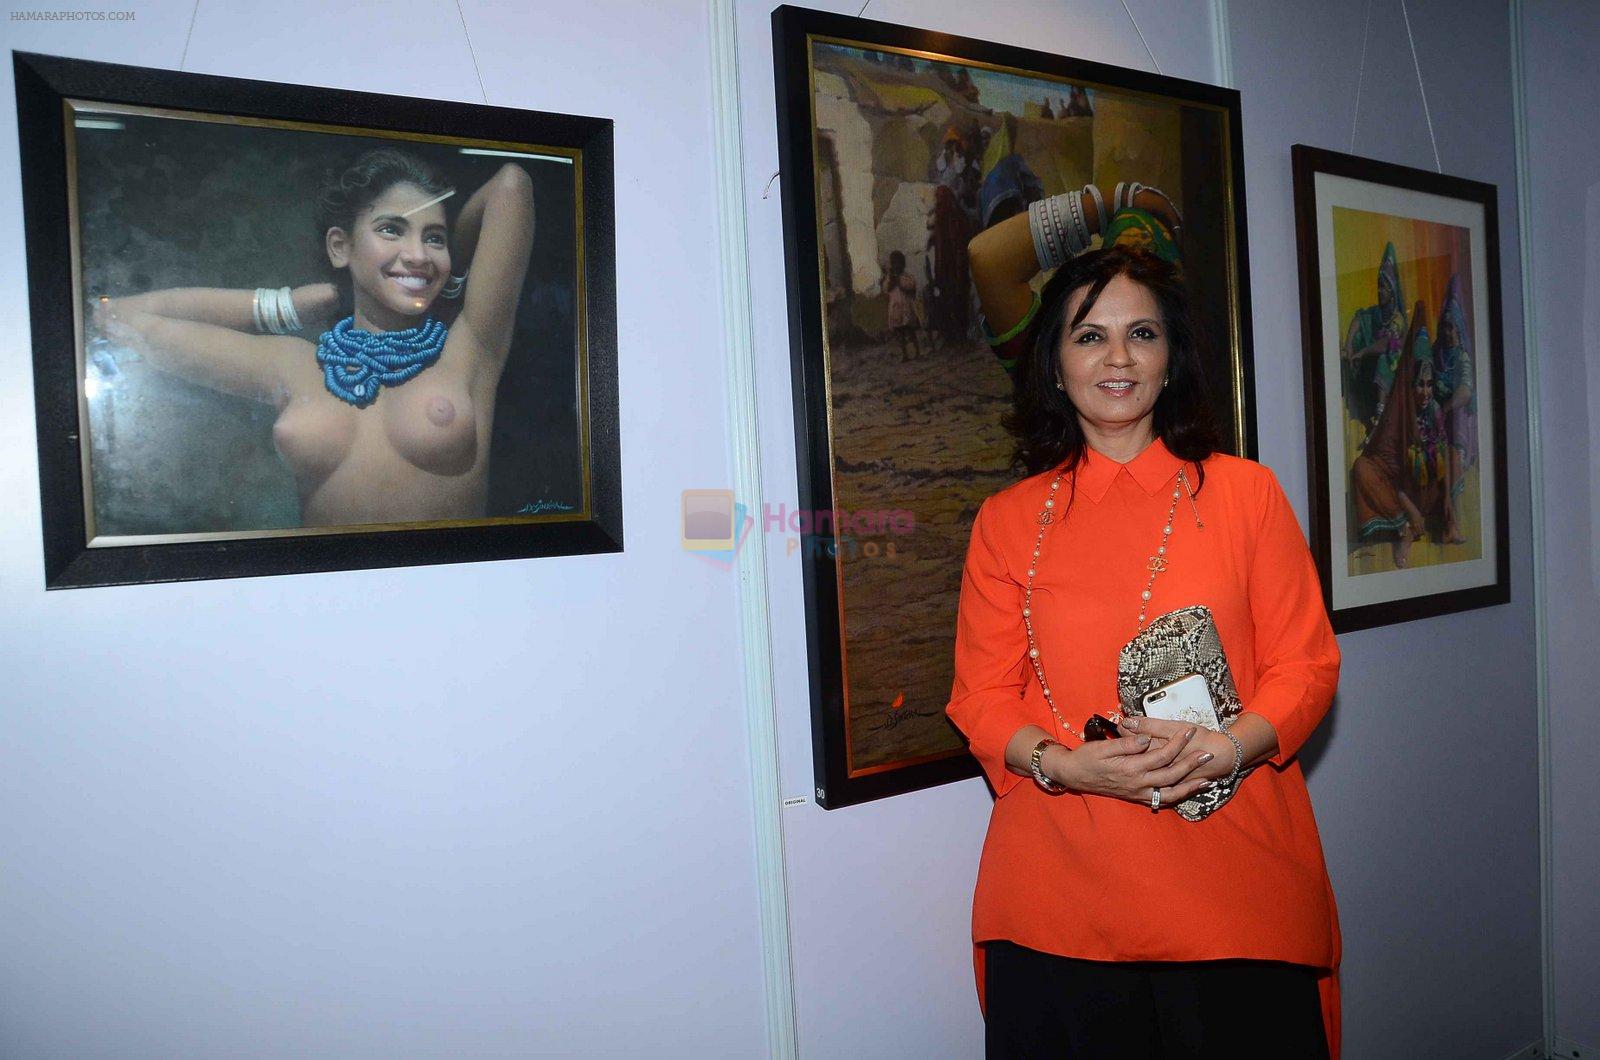 Neeta Lulla at JP Singhal exhibition on 15th Oct 2015